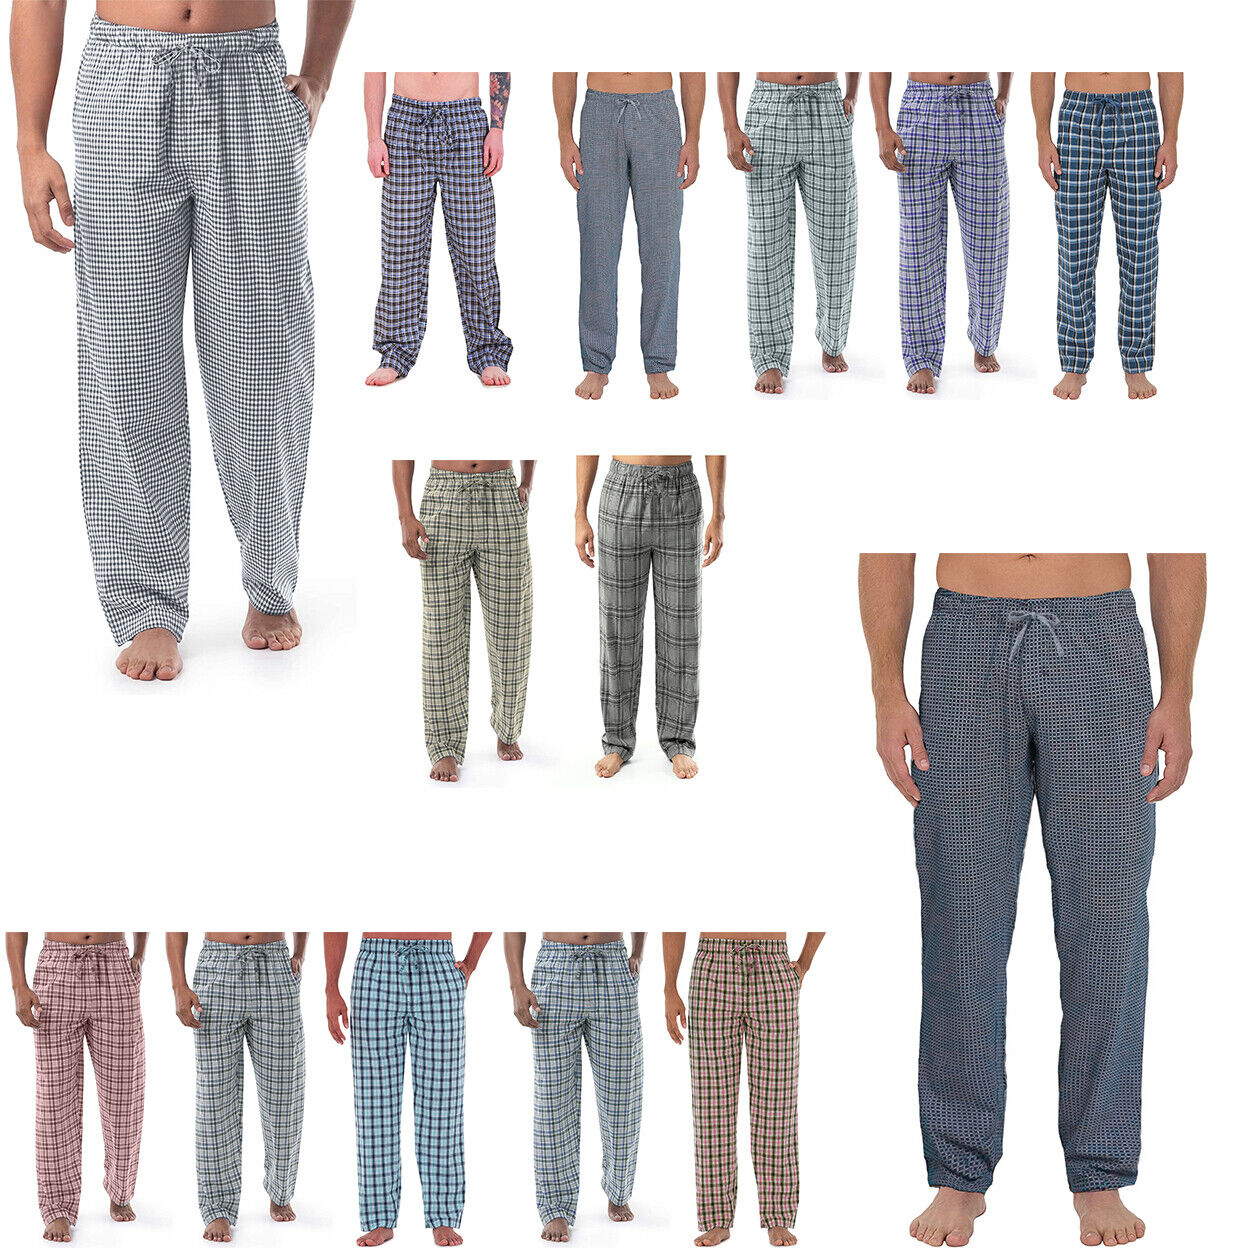 5-Pack: Men's Ultra-Soft Plaid Cotton Jersey Knit Comfy Sleep Lounge Pajama Pants - Small